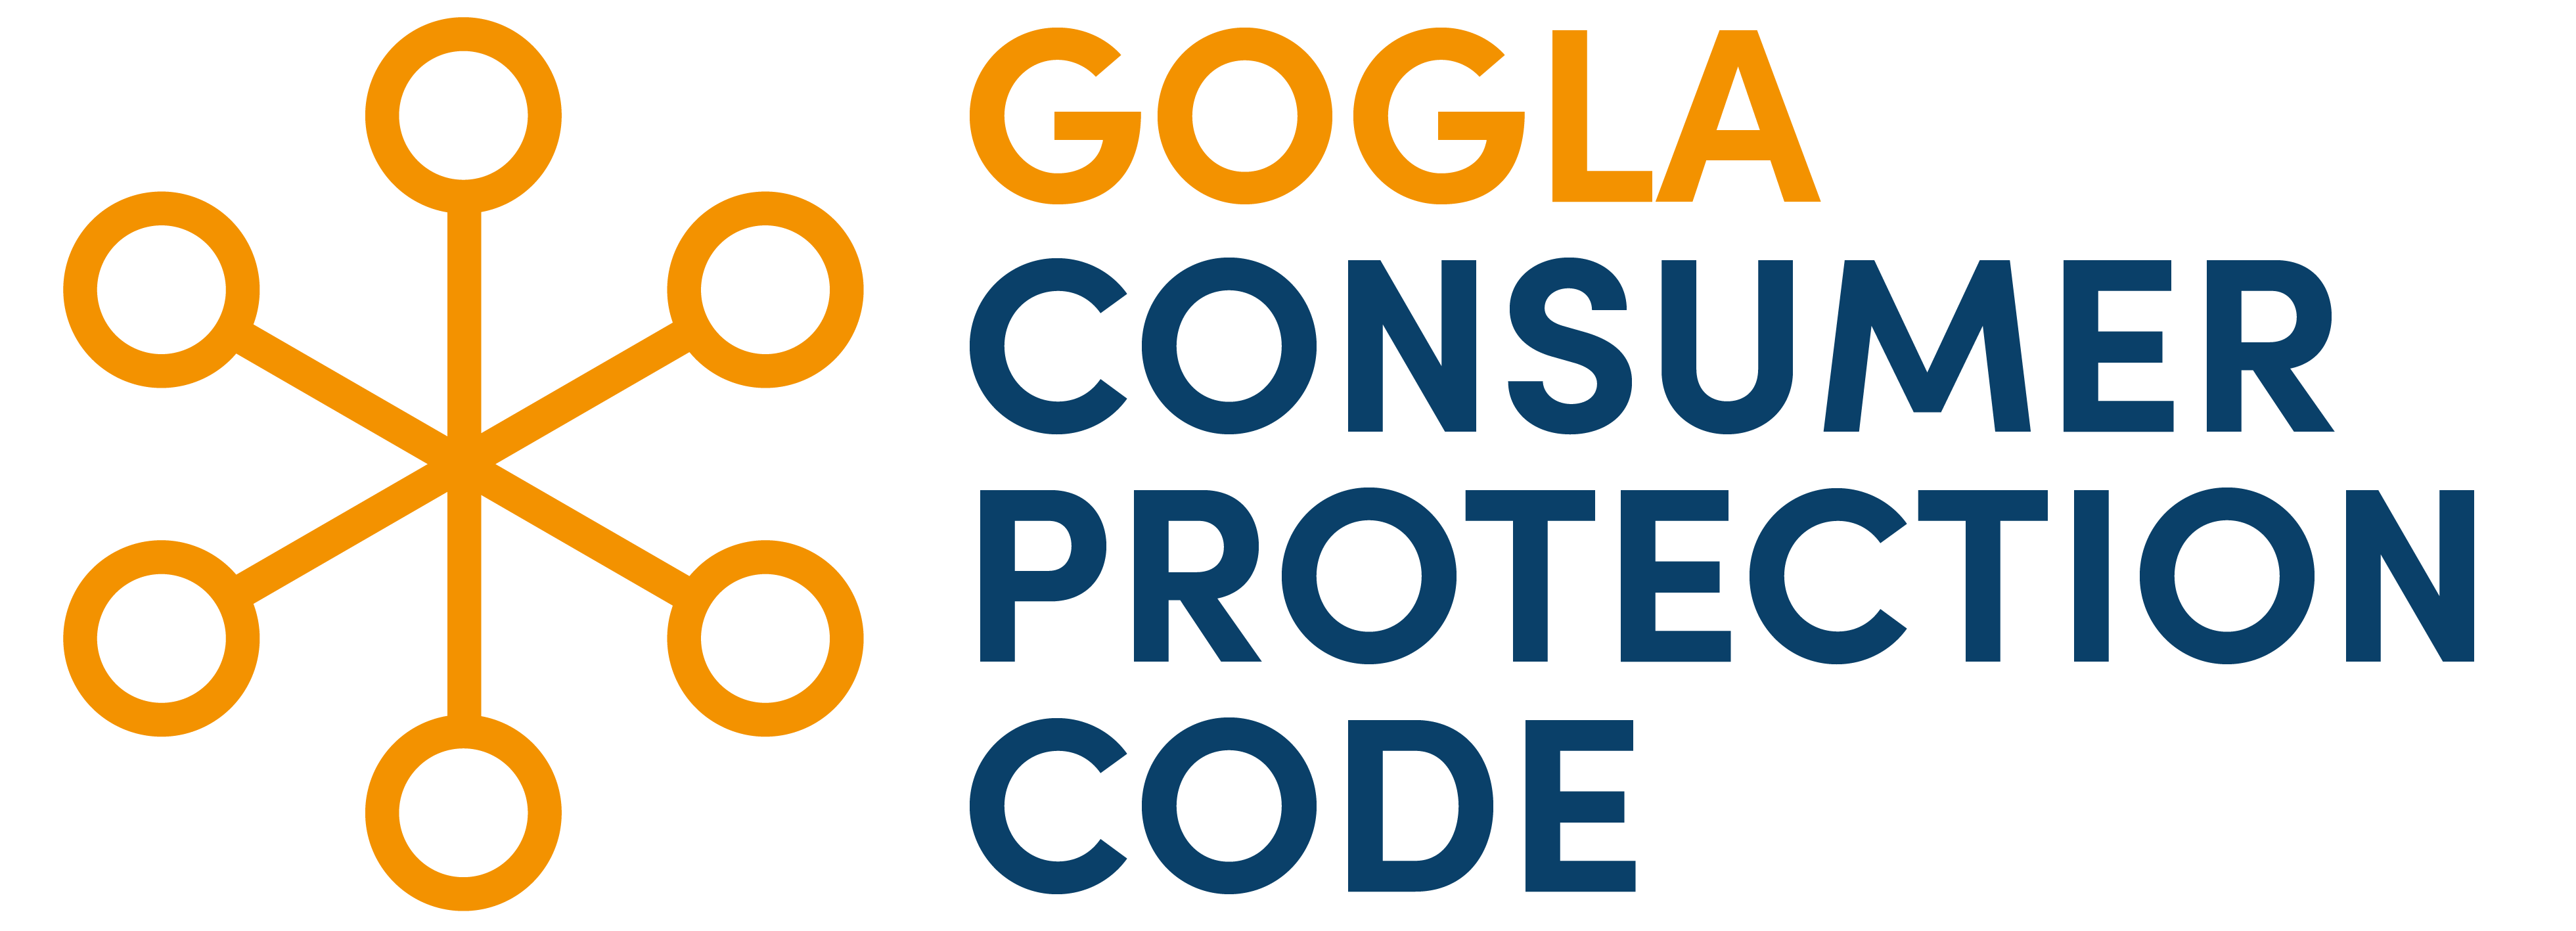 GOGLA Consumer Protection Code